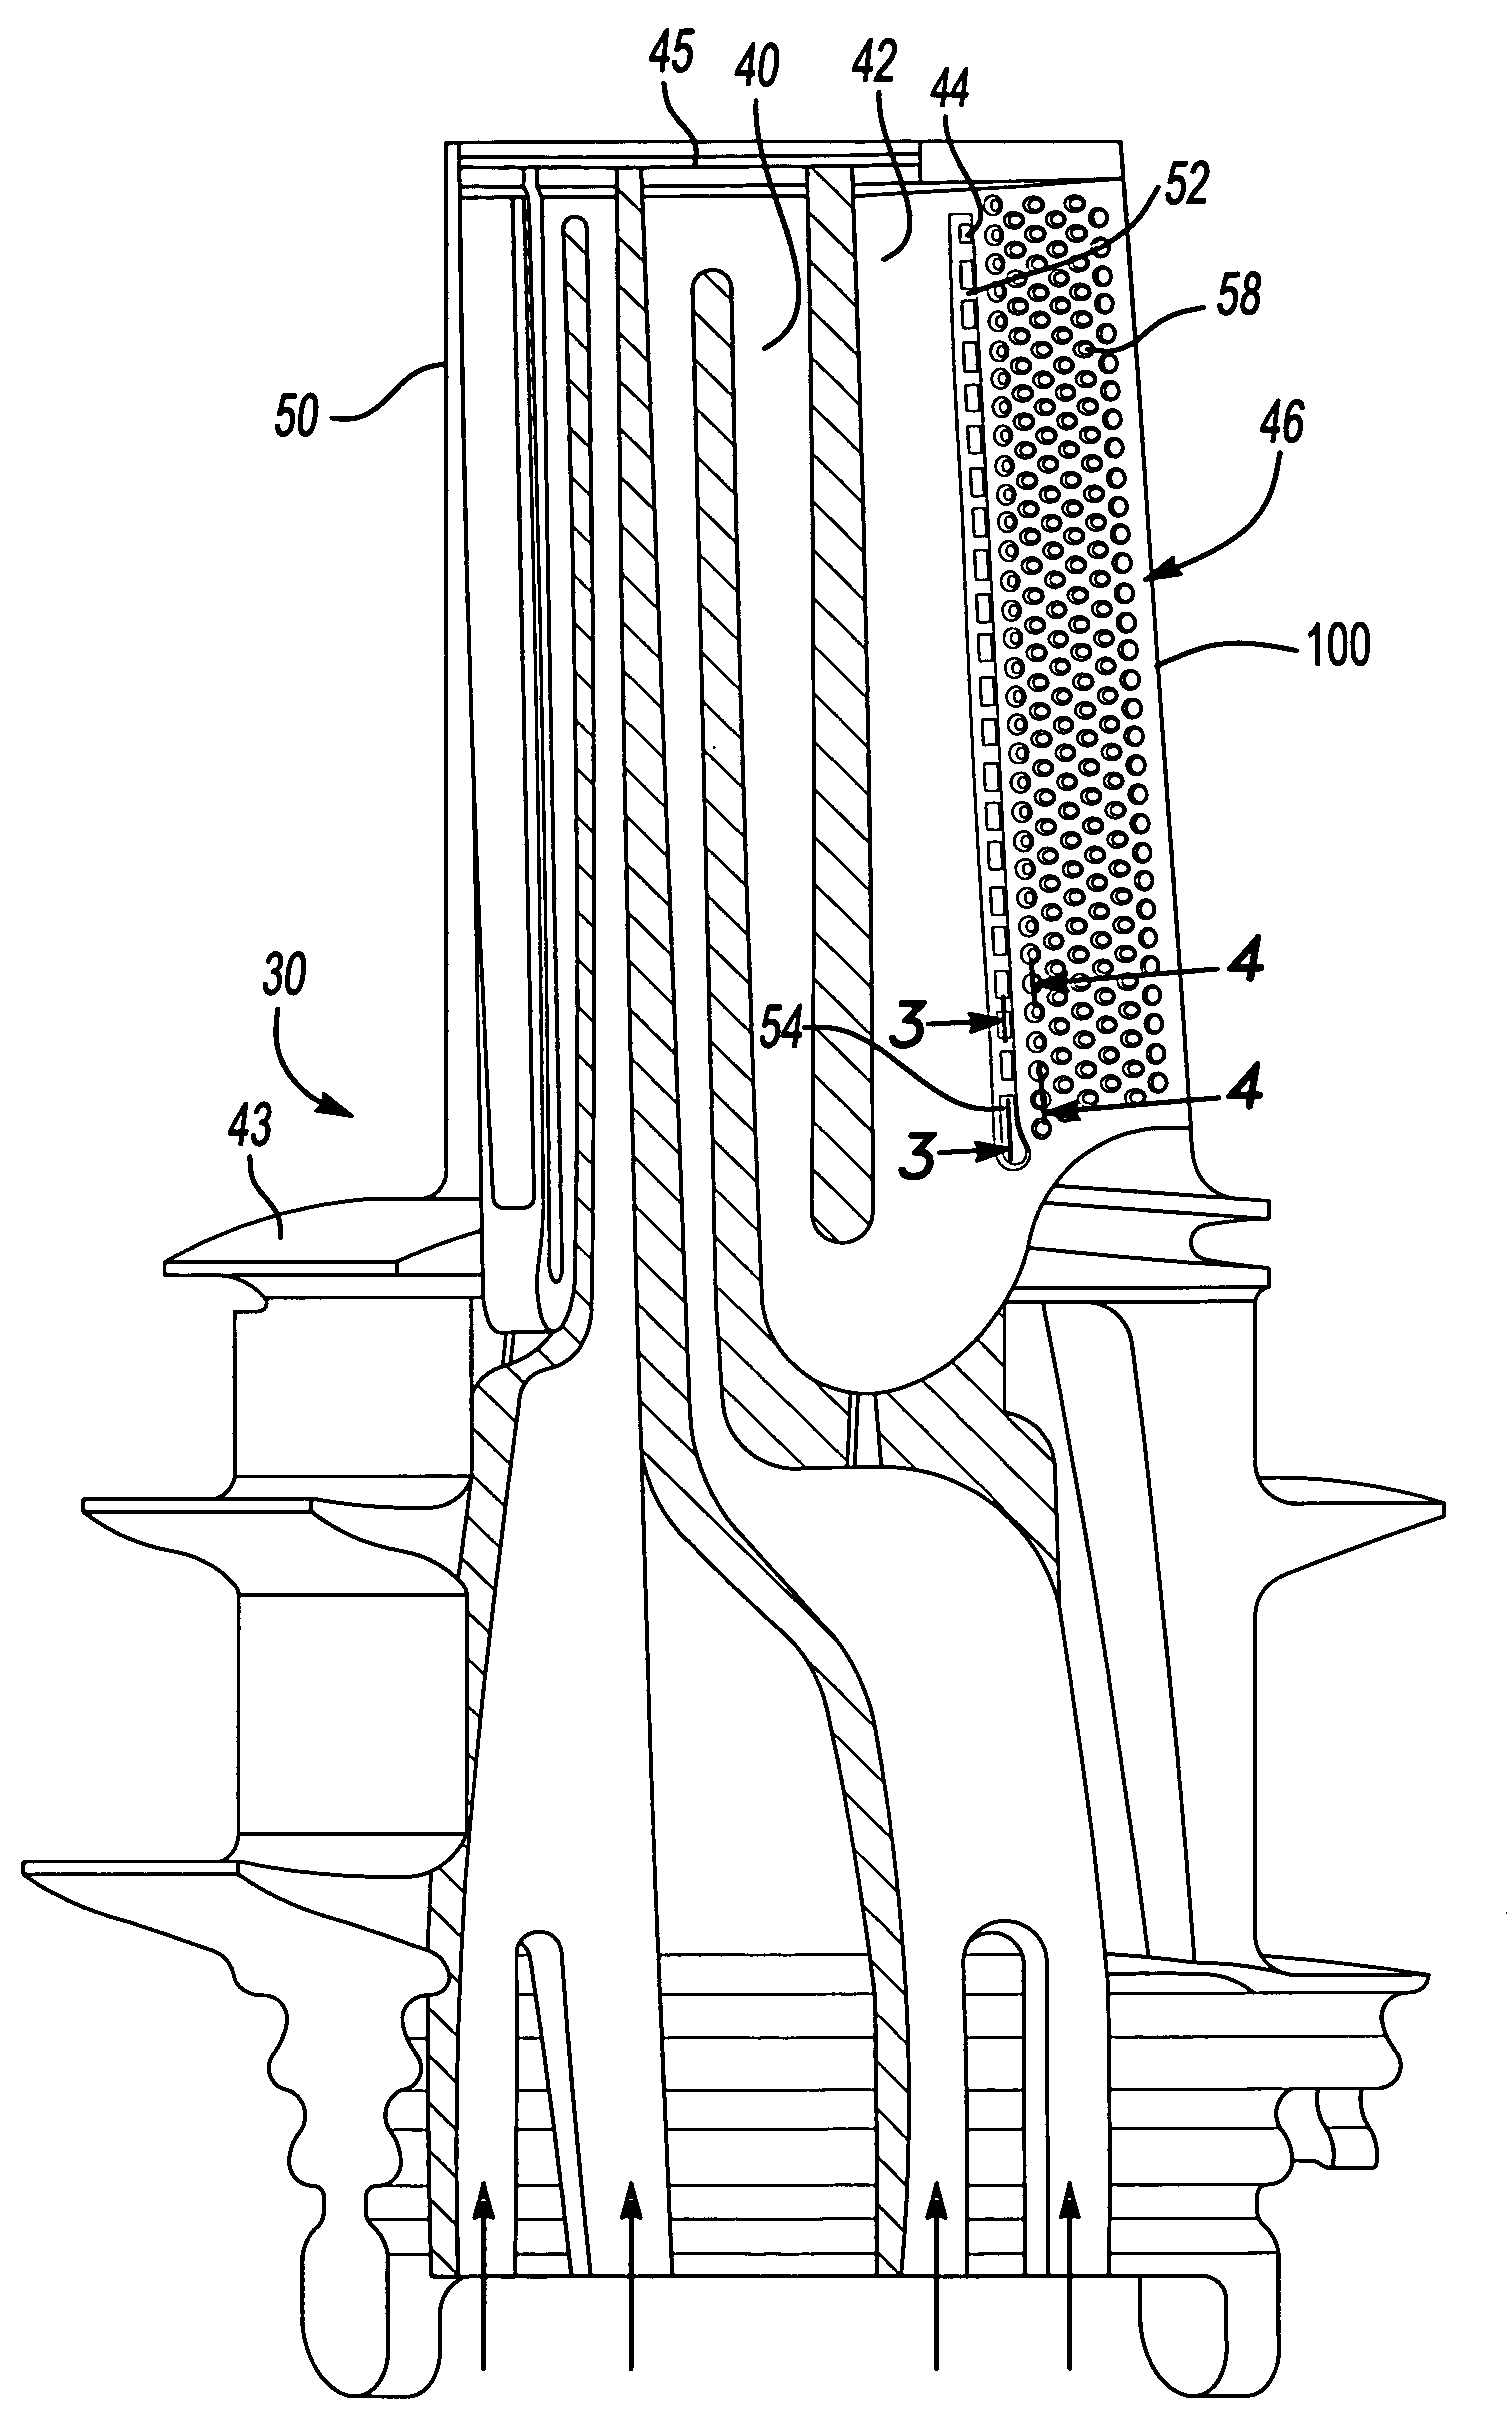 Turbine blade with split impingement rib